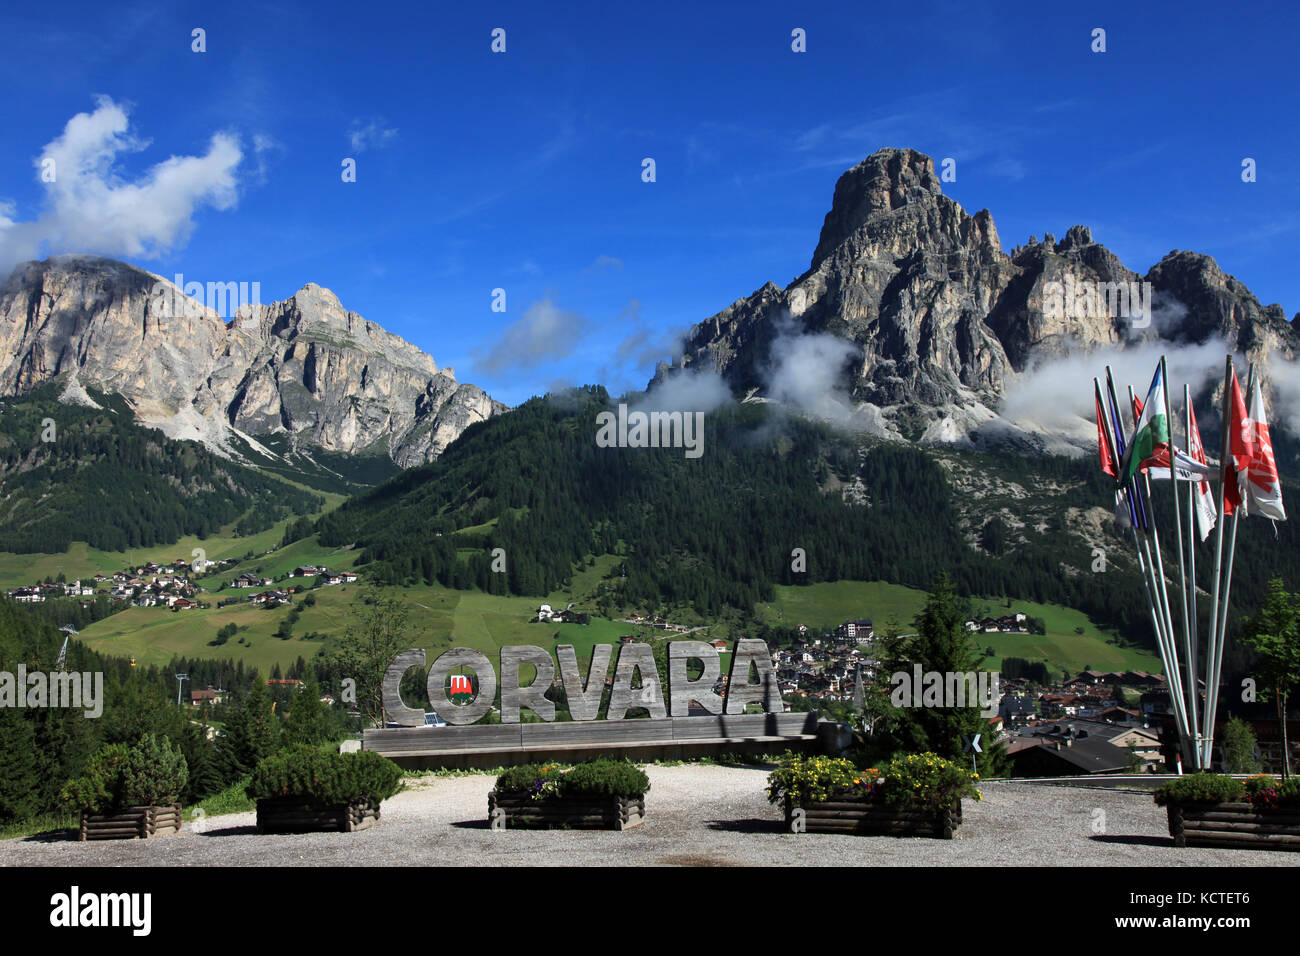 Mount Sassongher overlooking Corvara, South Tirol, Italy Stock Photo